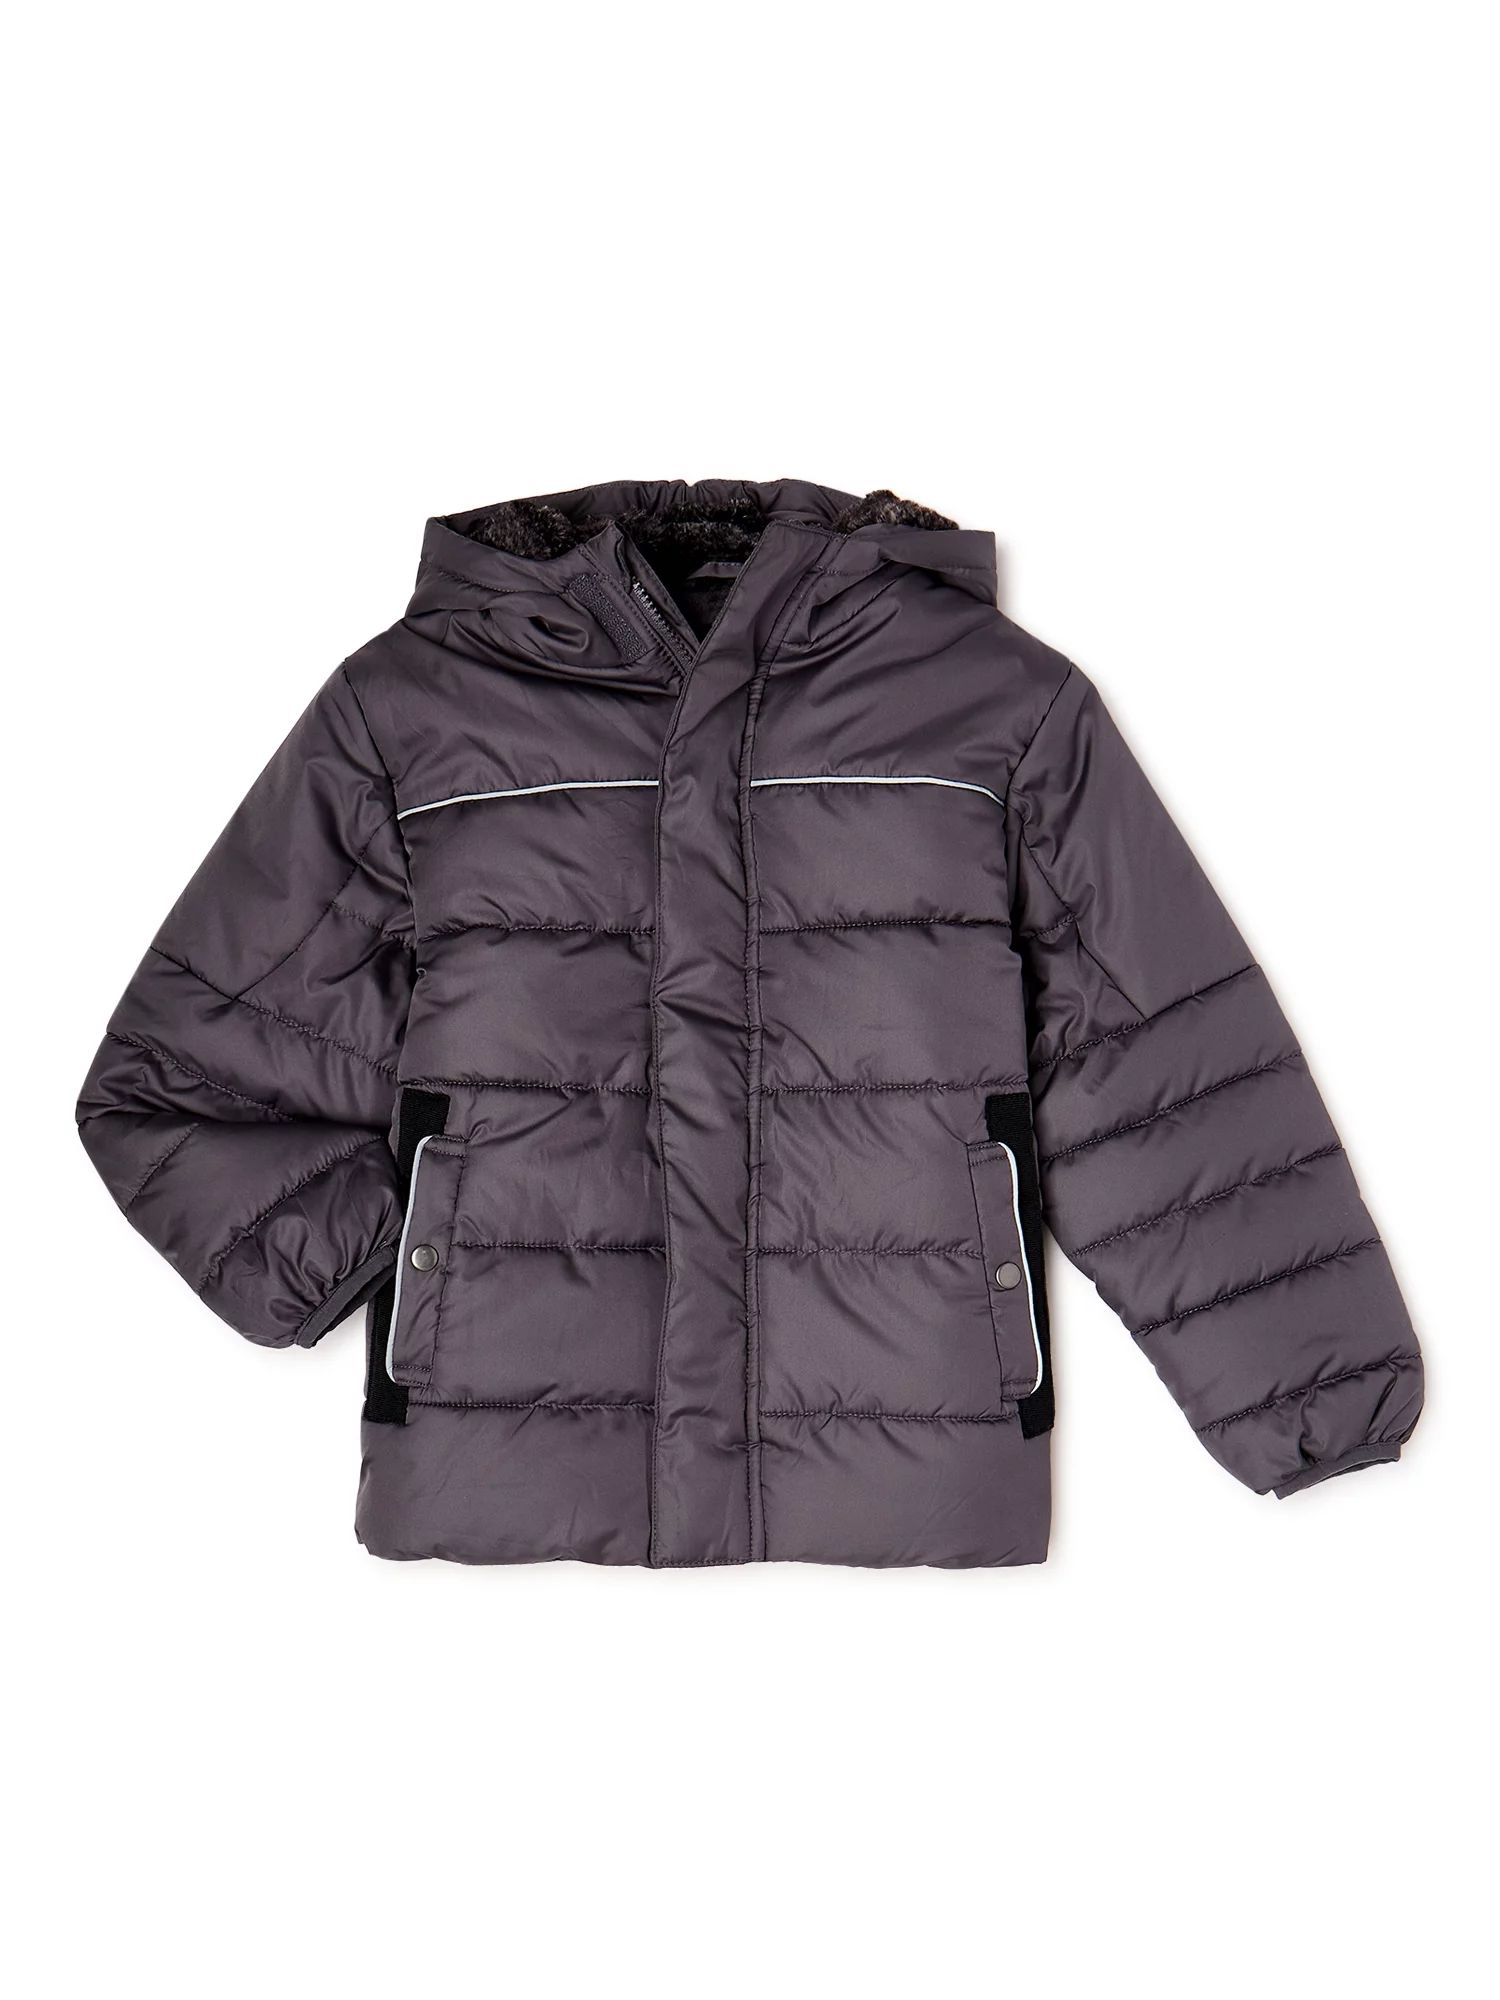 Swiss Tech Boys' Puffer Jacket with Hood, Sizes 4-18 | Walmart (US)